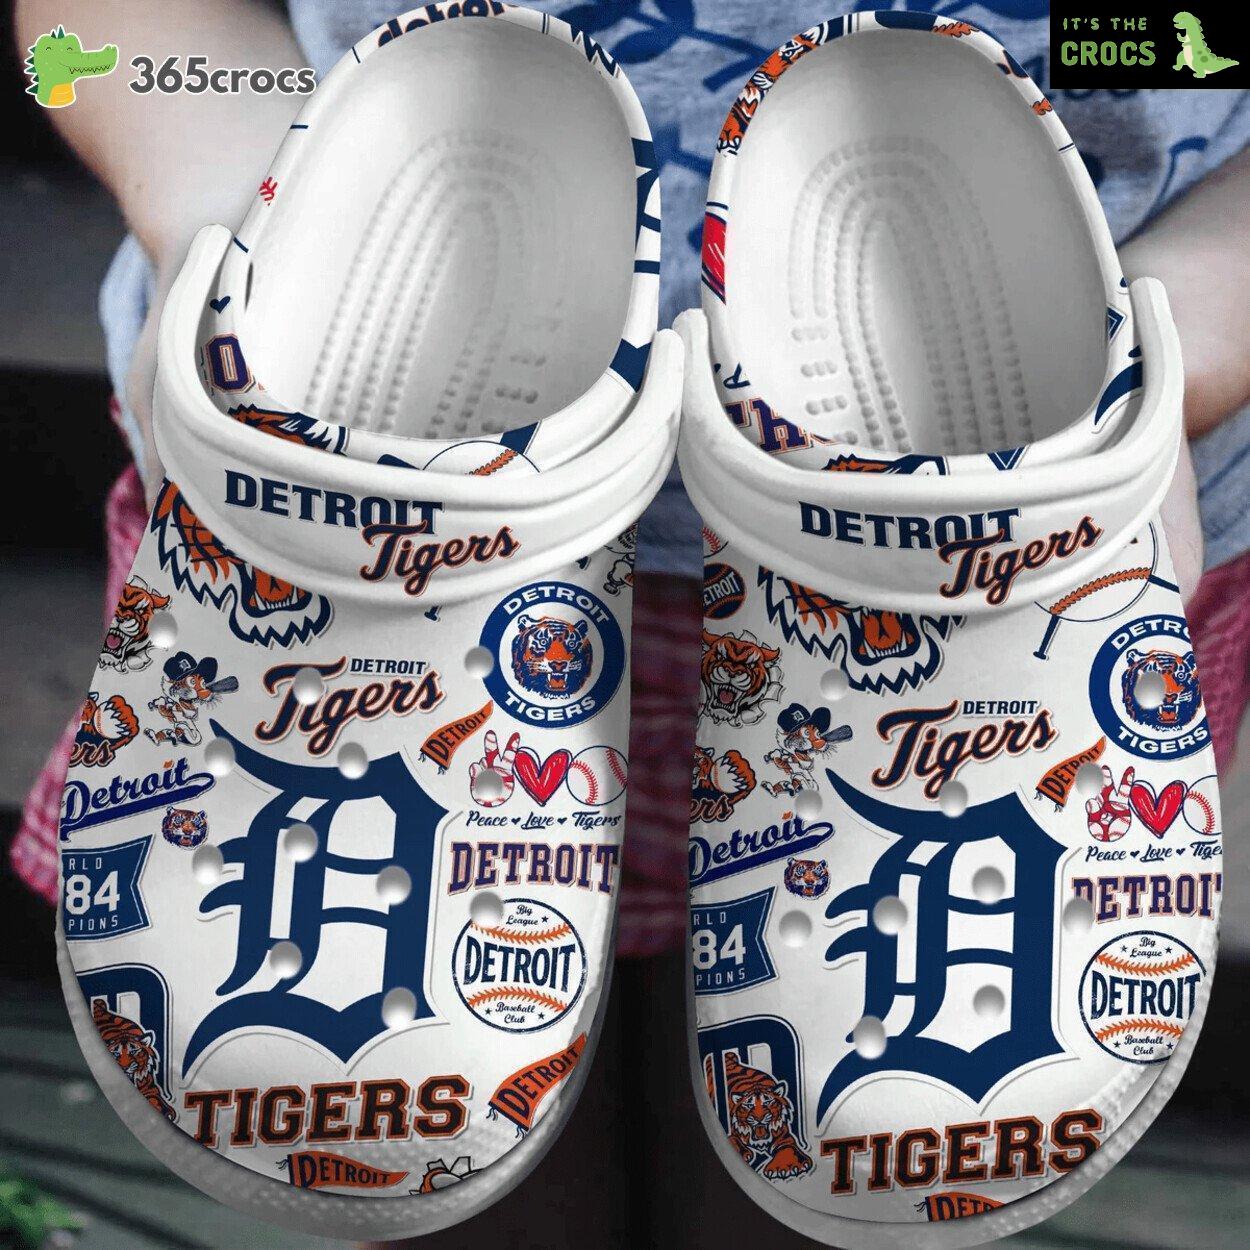 Detroit Tigers Baseball team MLB Sport Crocs Clogs Shoes Comfortable